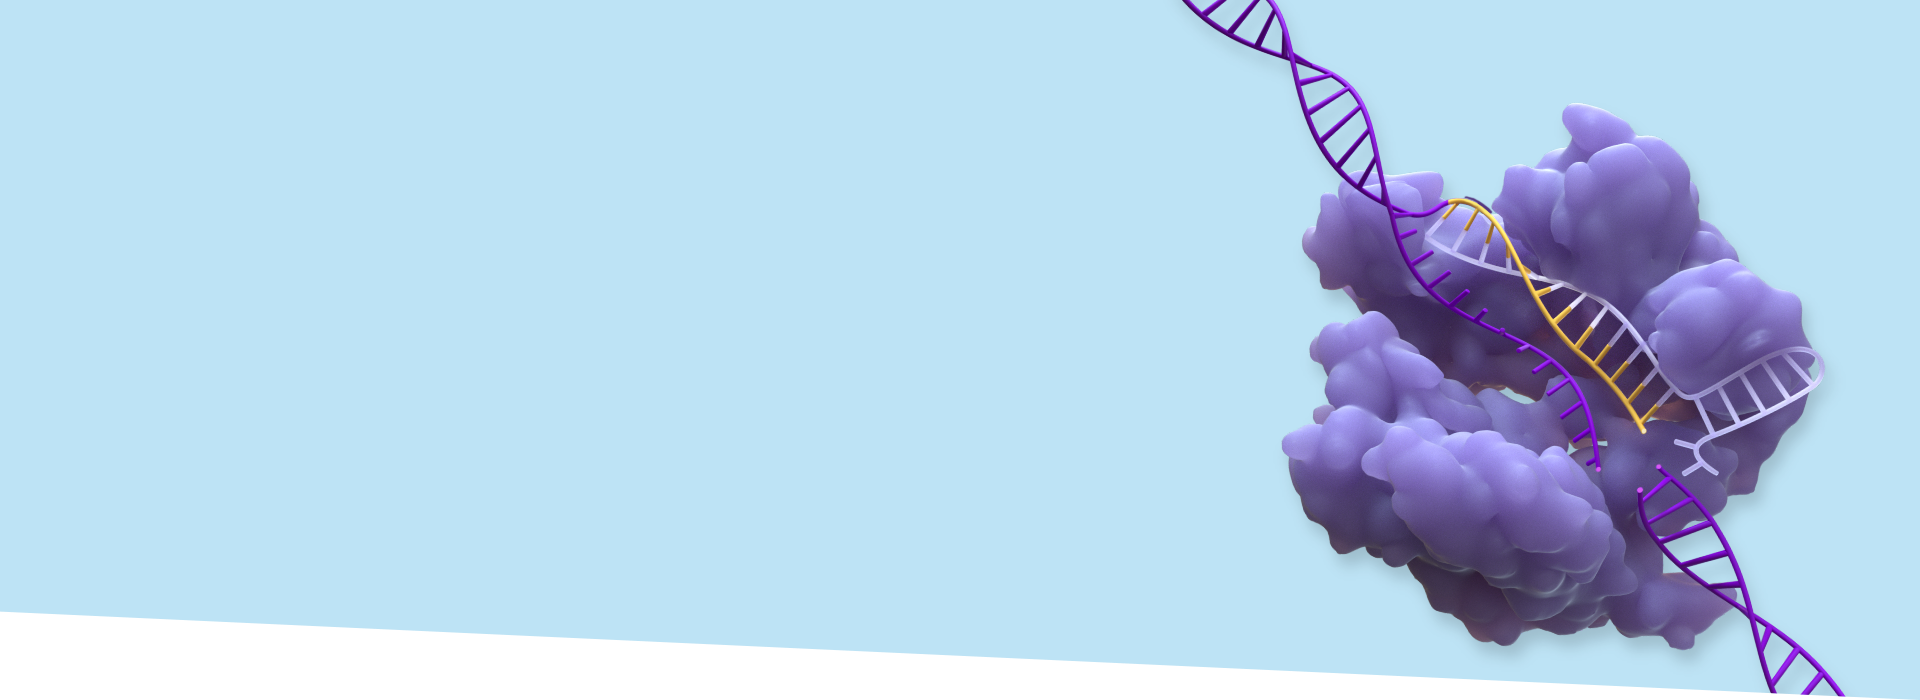 CRISPR/Cas gene editing system unraveling a  DNA strand